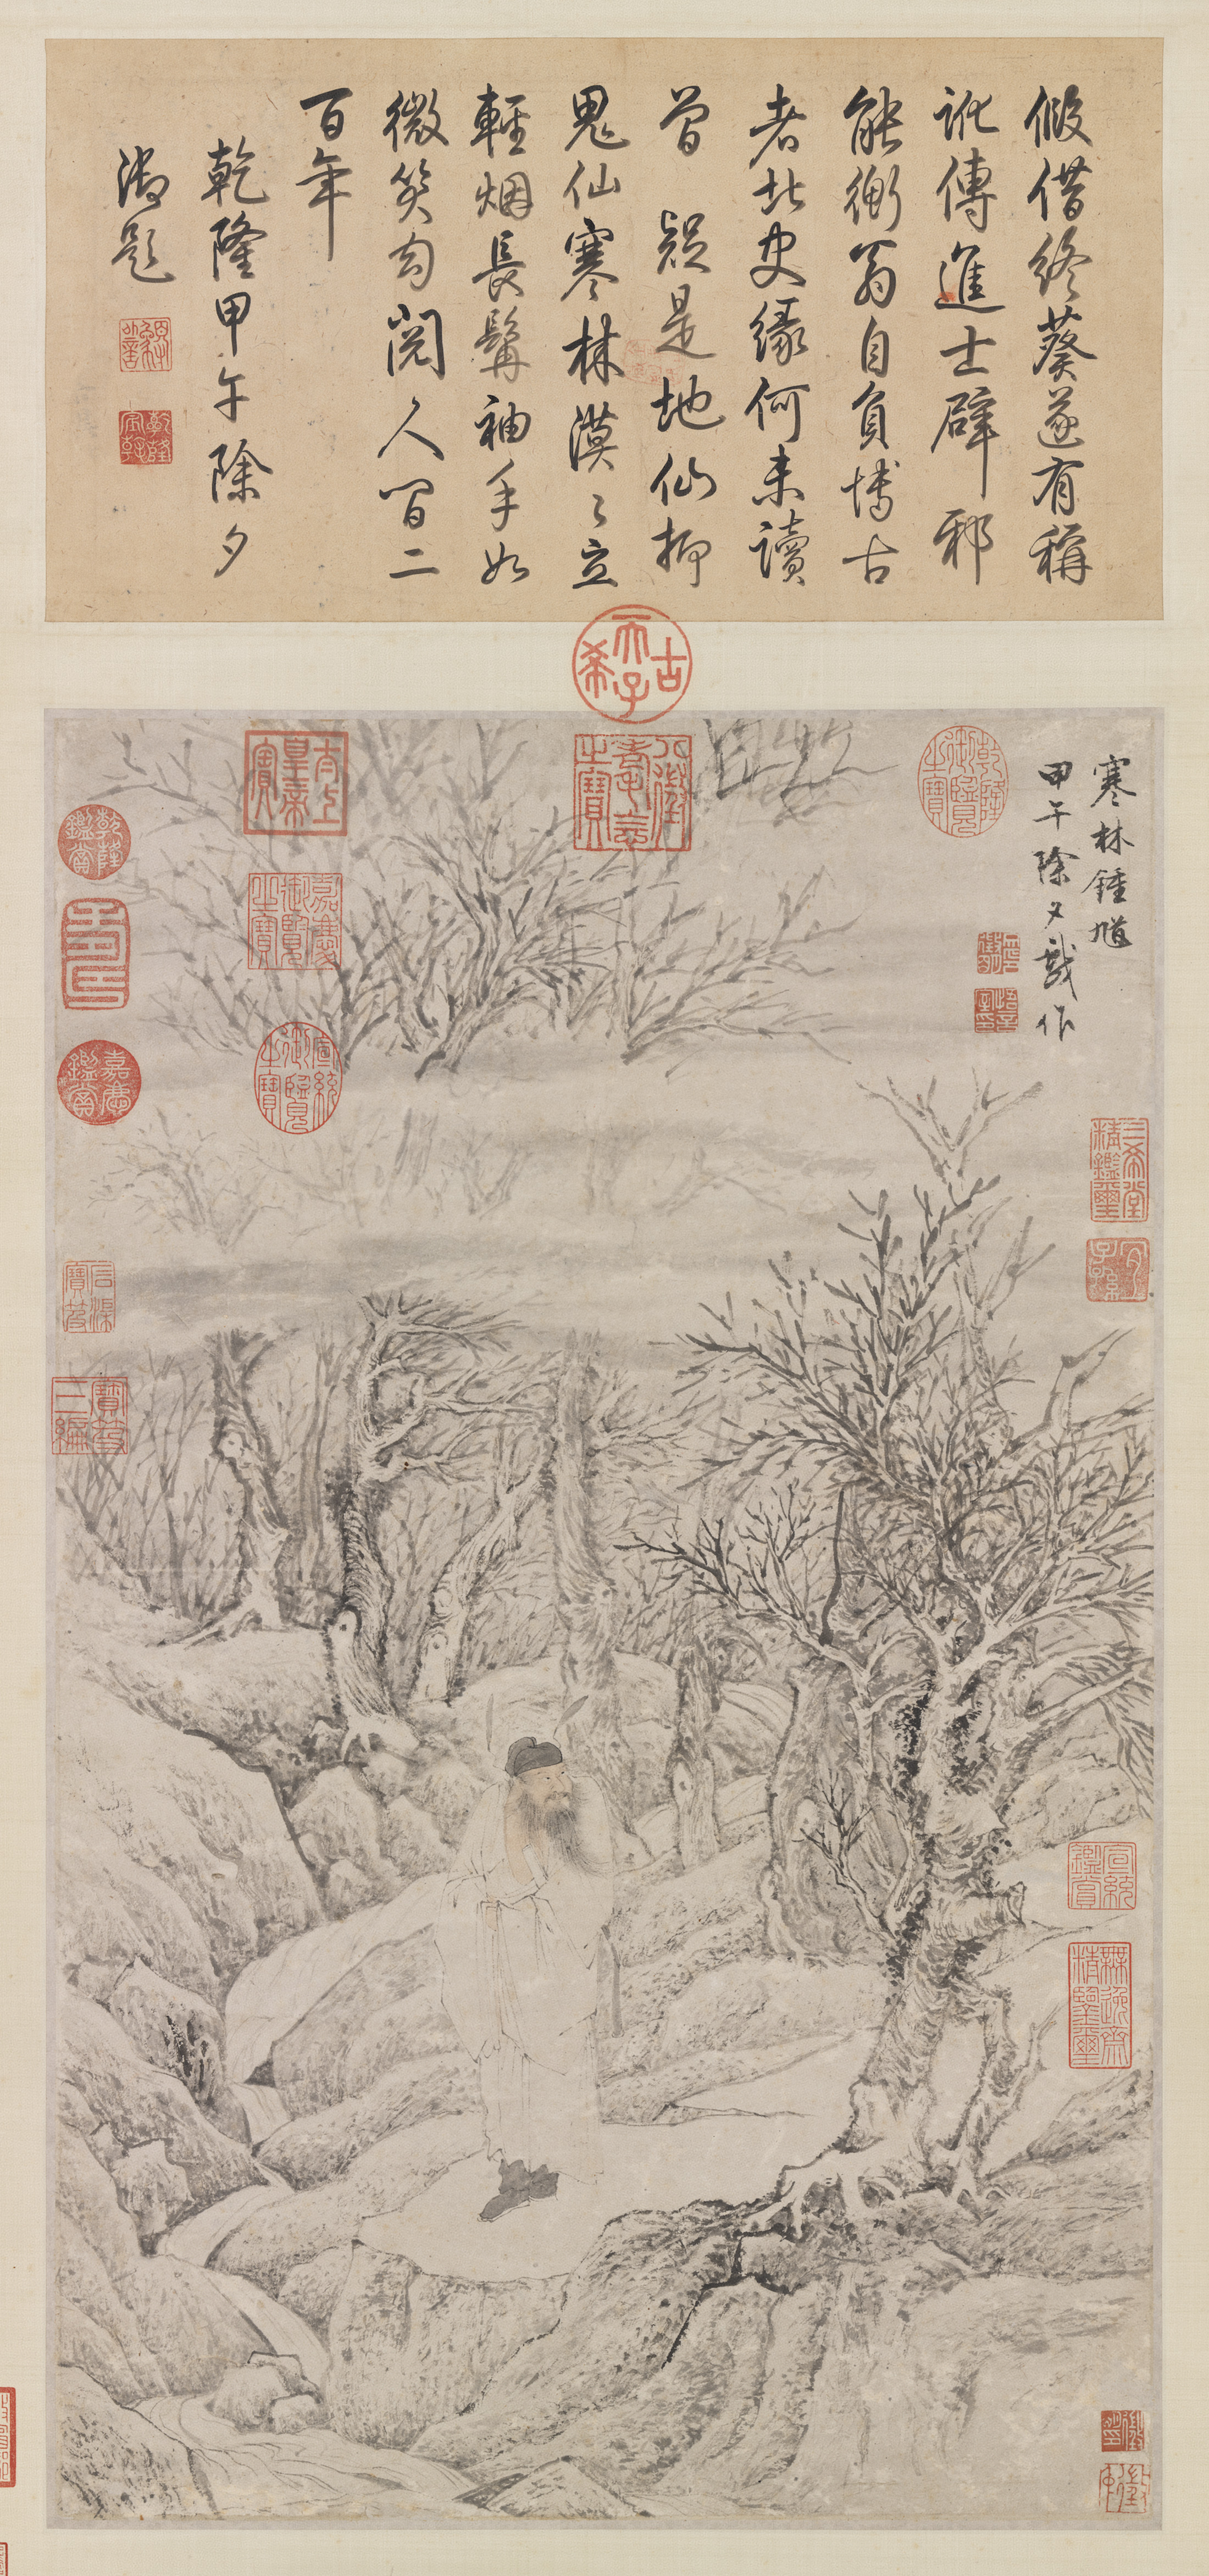 Zhong Kui in a Wintry Grove